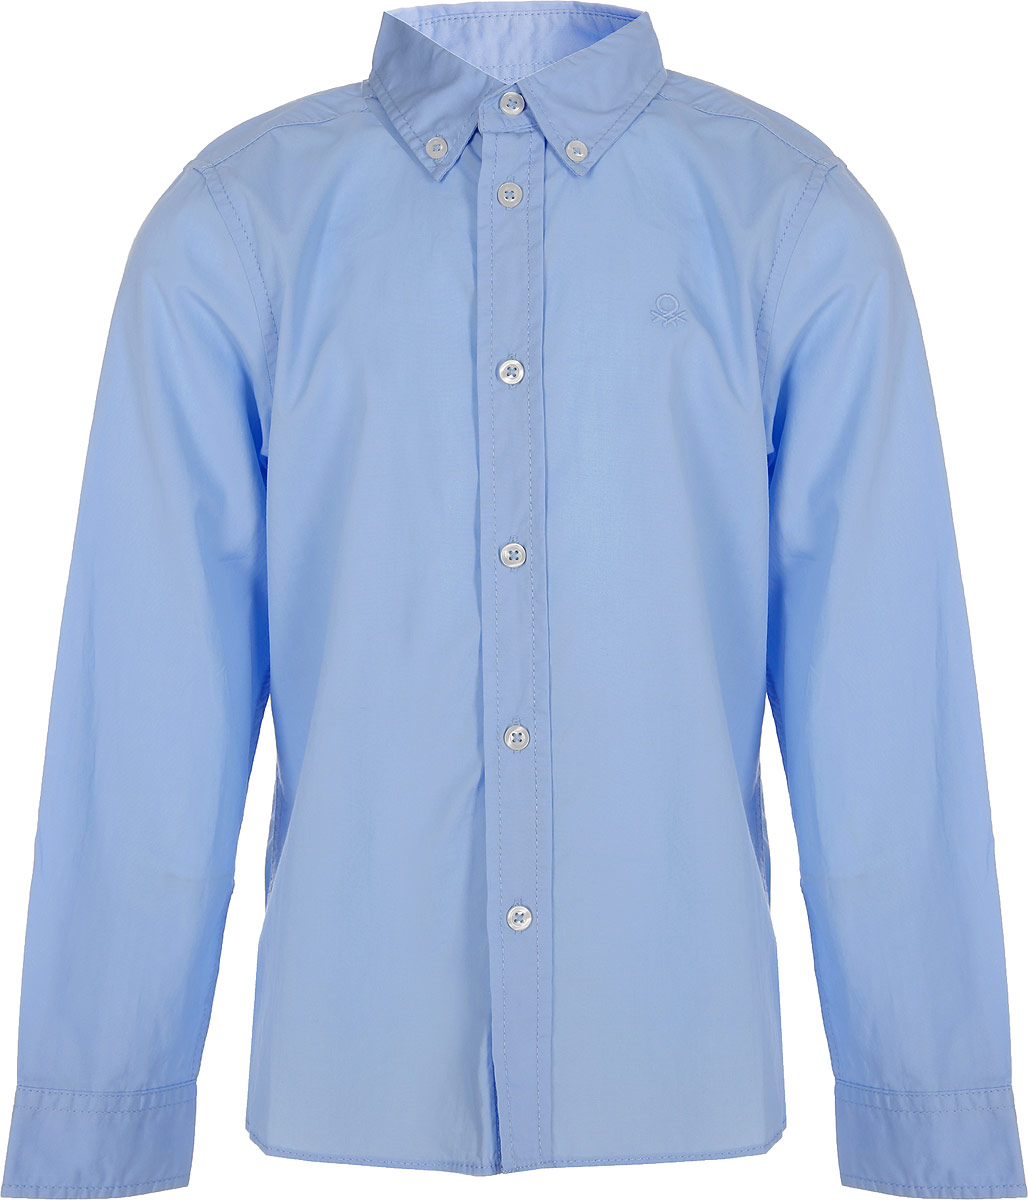 Рубашка для мальчика United Colors of Benetton, цвет: темно-голубой. 5EW75Q600_20B. Размер 110